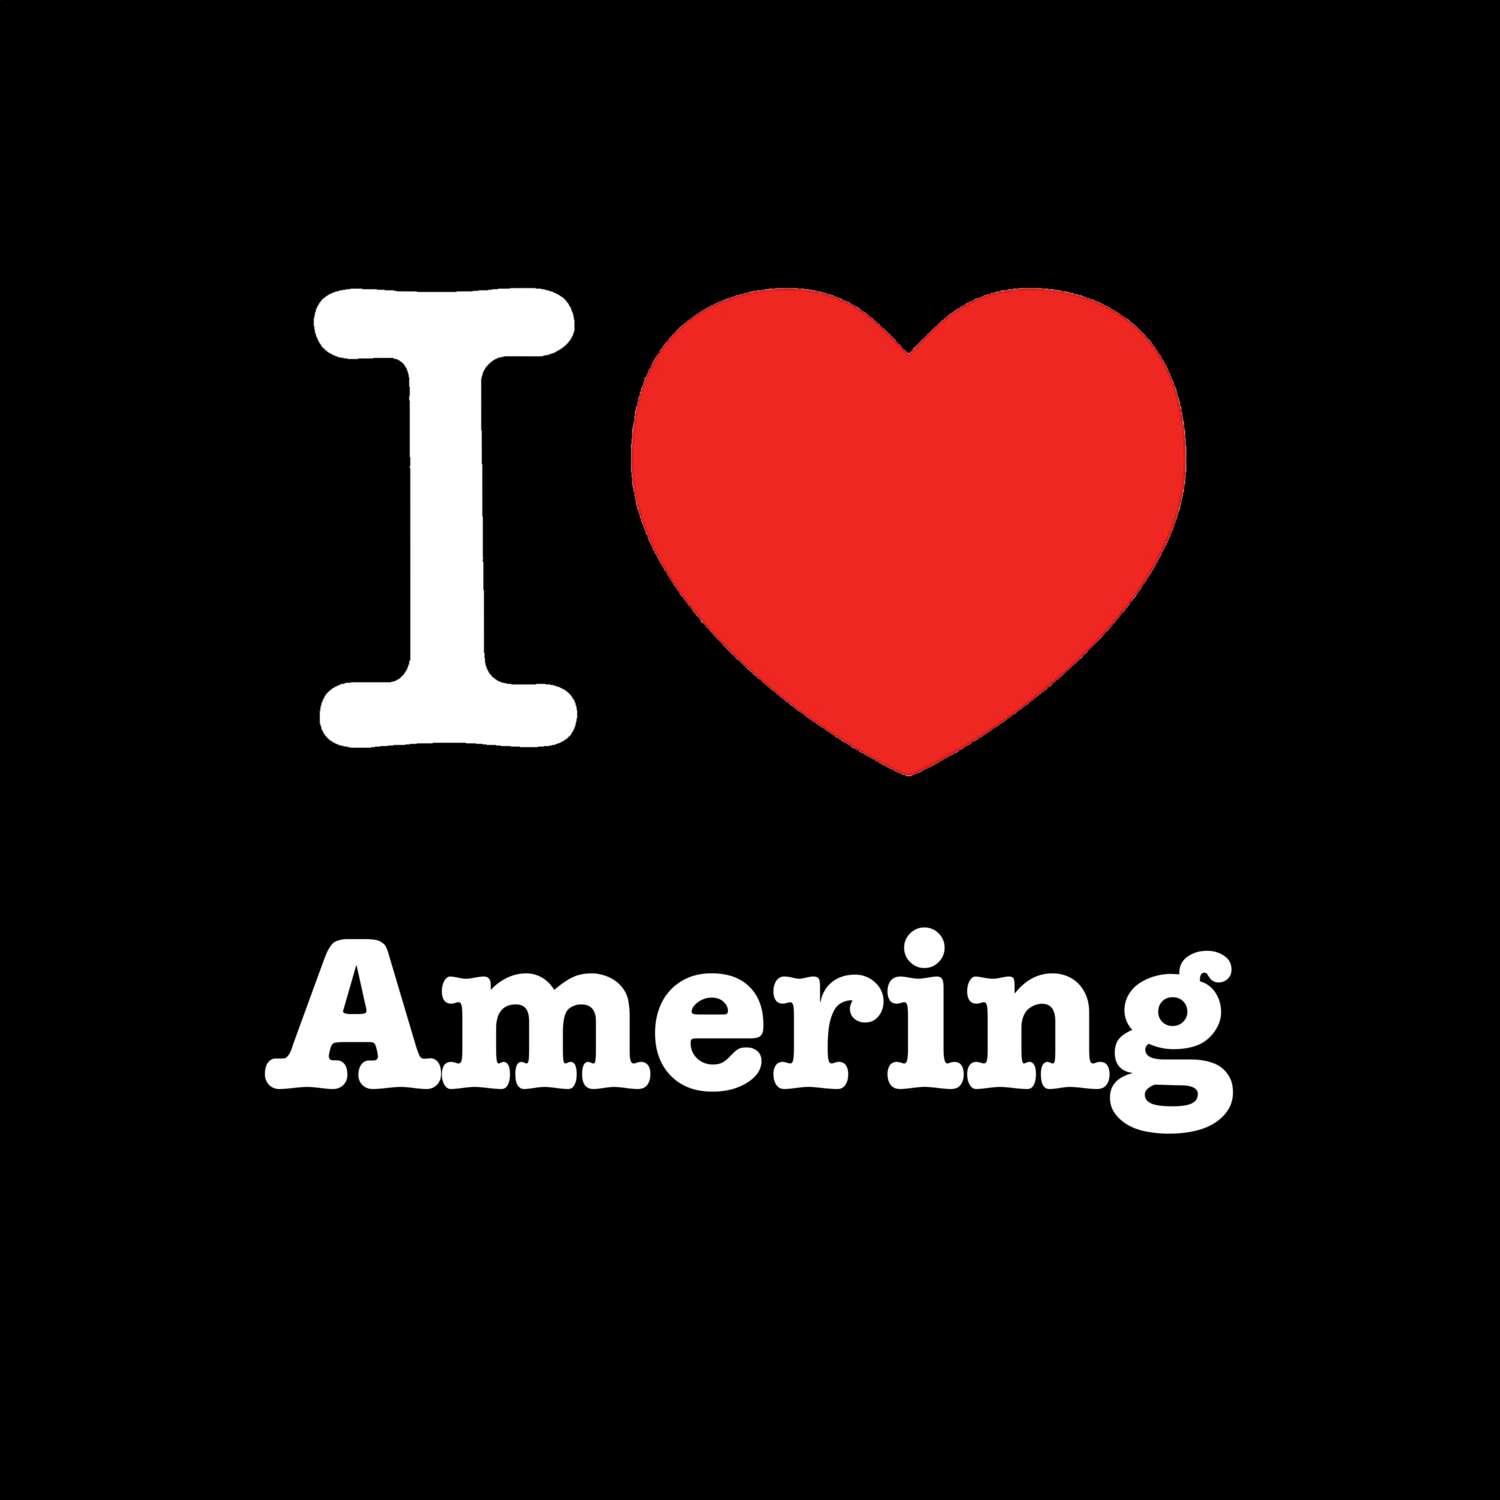 Amering T-Shirt »I love«